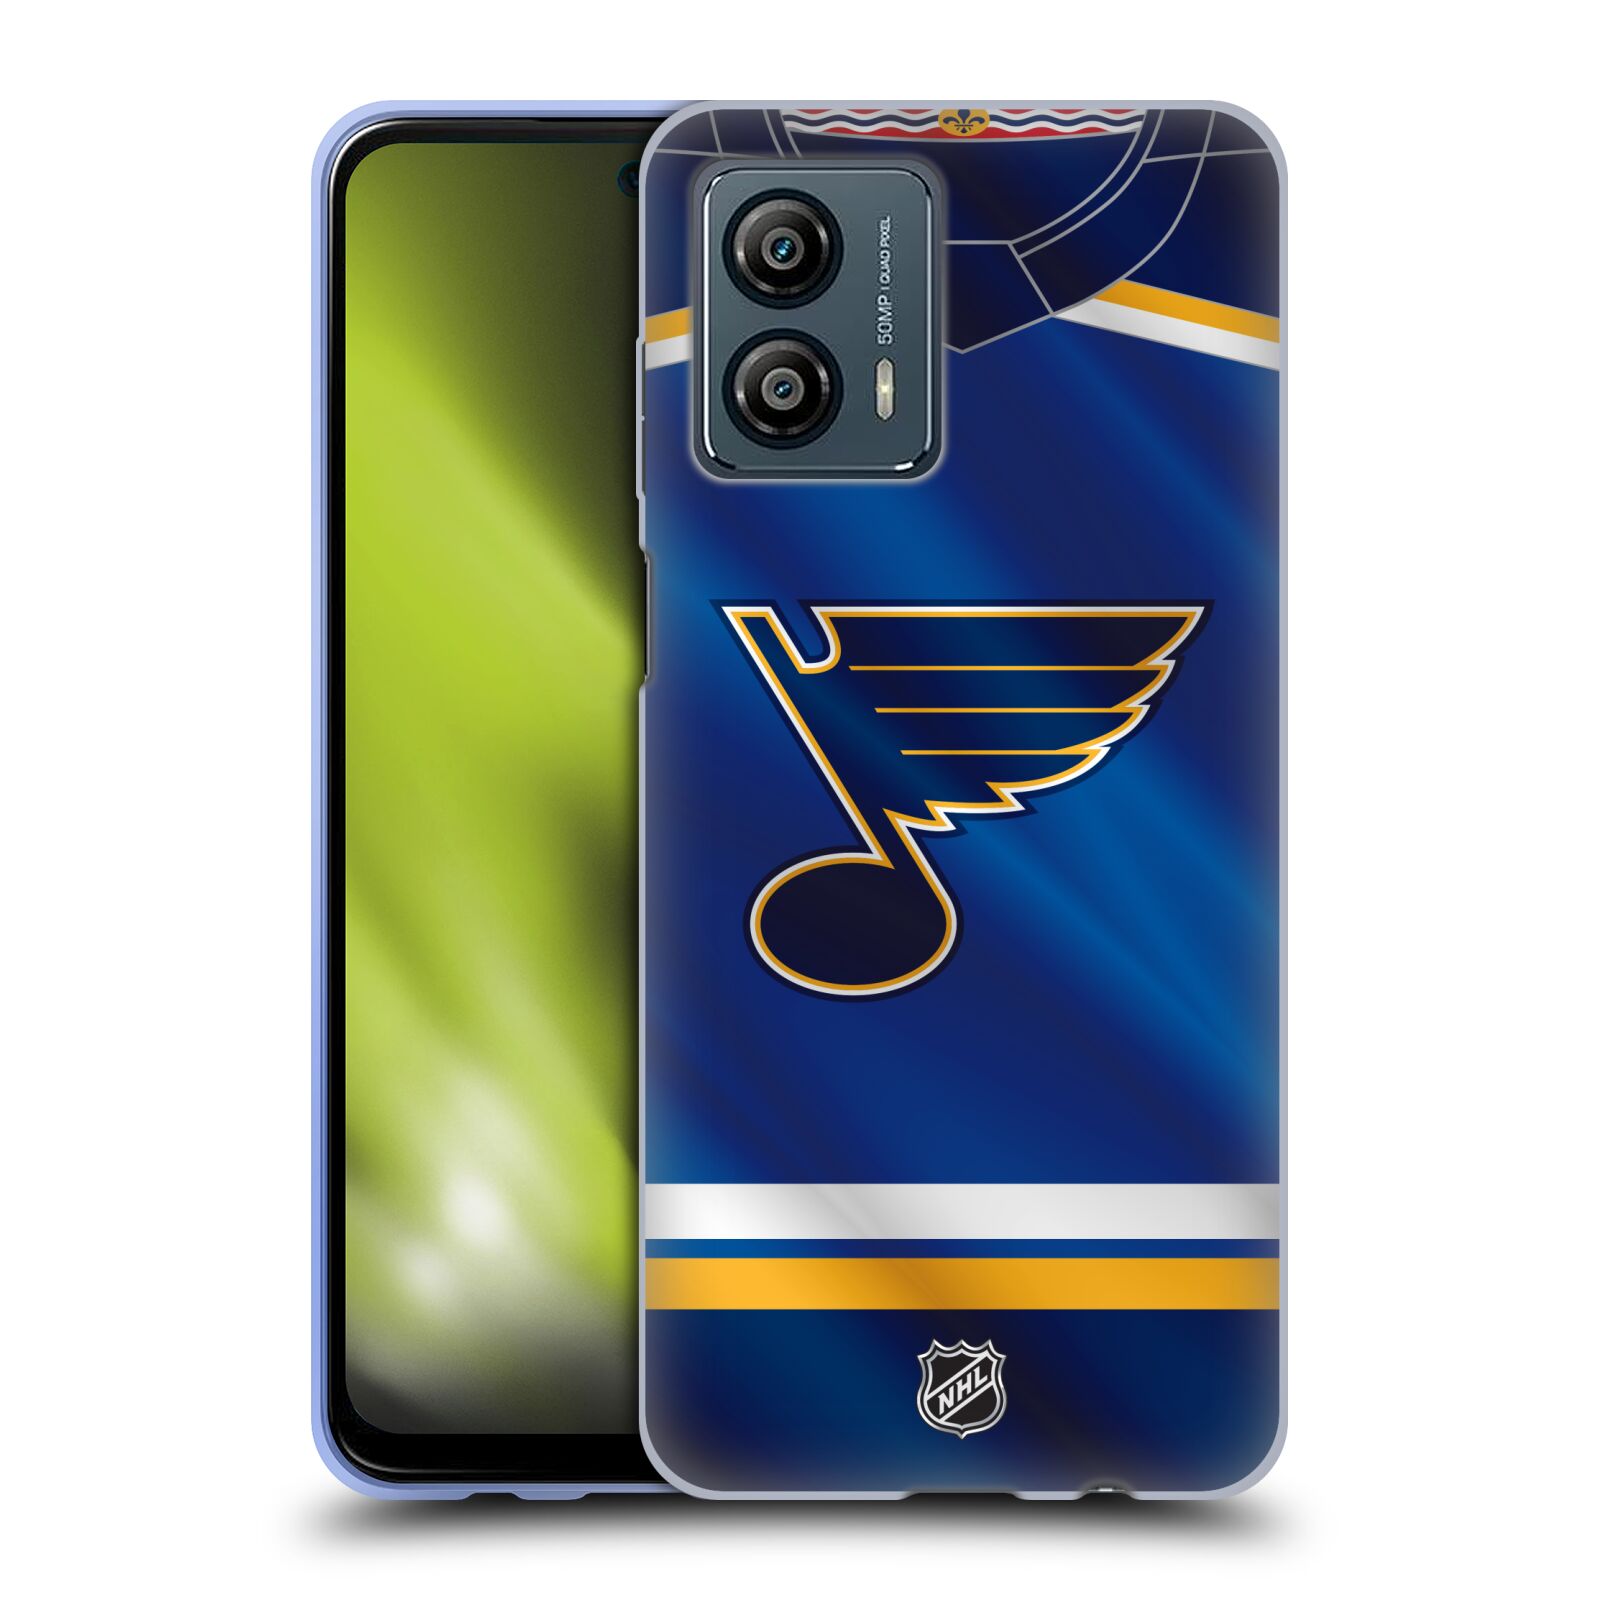 Silikonové pouzdro na mobil Motorola Moto G53 5G - NHL - Dres St Louis Blues (Silikonový kryt, obal, pouzdro na mobilní telefon Motorola Moto G53 5G s licencovaným motivem NHL - Dres St Louis Blues)